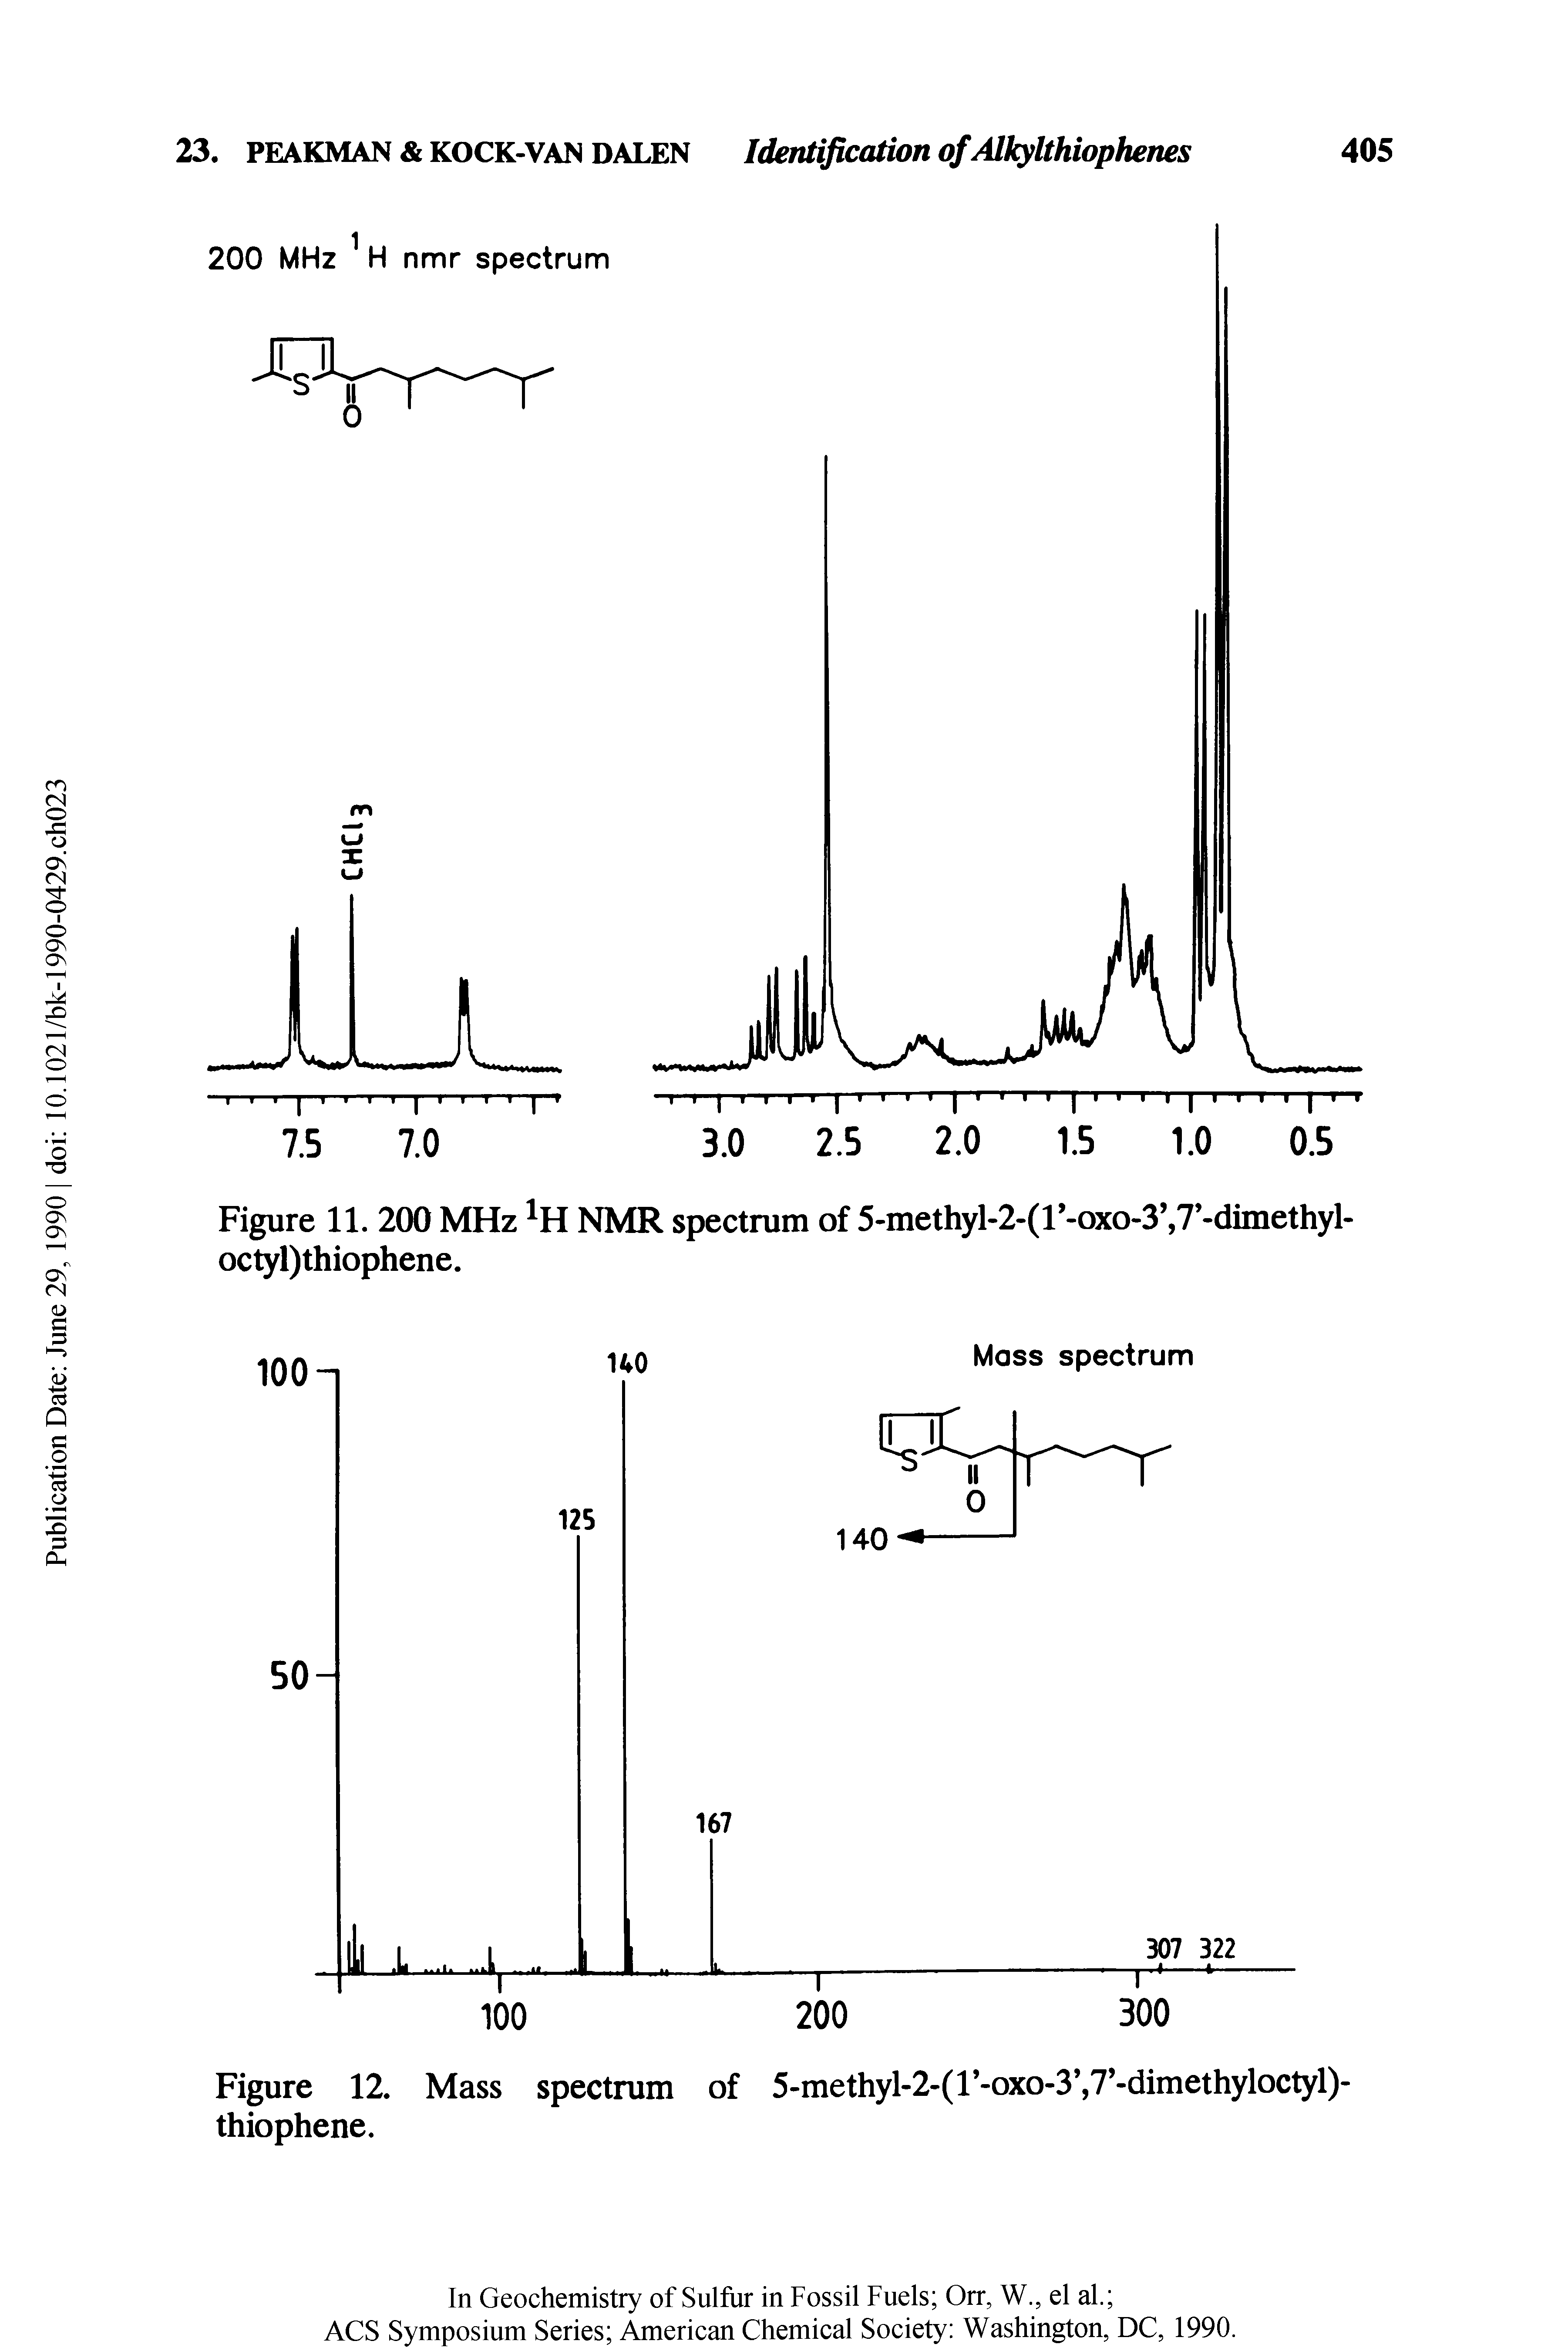 Figure 11. 200 MHz 1H NMR spectrum of 5-methyl-2-(l,-oxo-3,7 -dimethyl-octyl)thiophene.